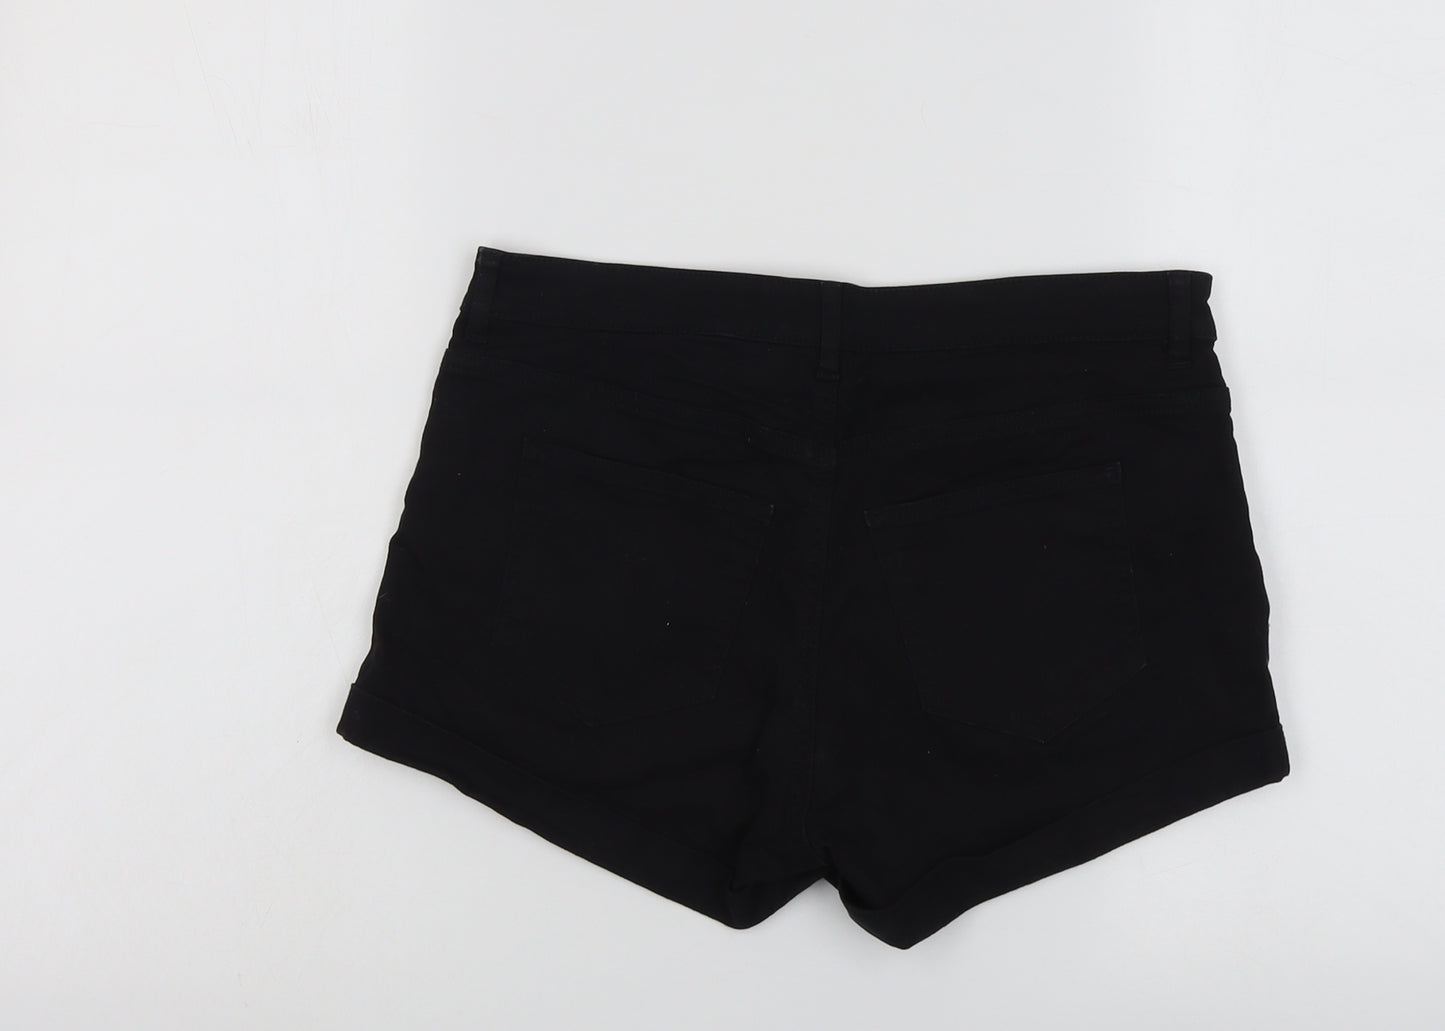 H&M Womens Black Cotton Hot Pants Shorts Size 10 L3 in Regular Button